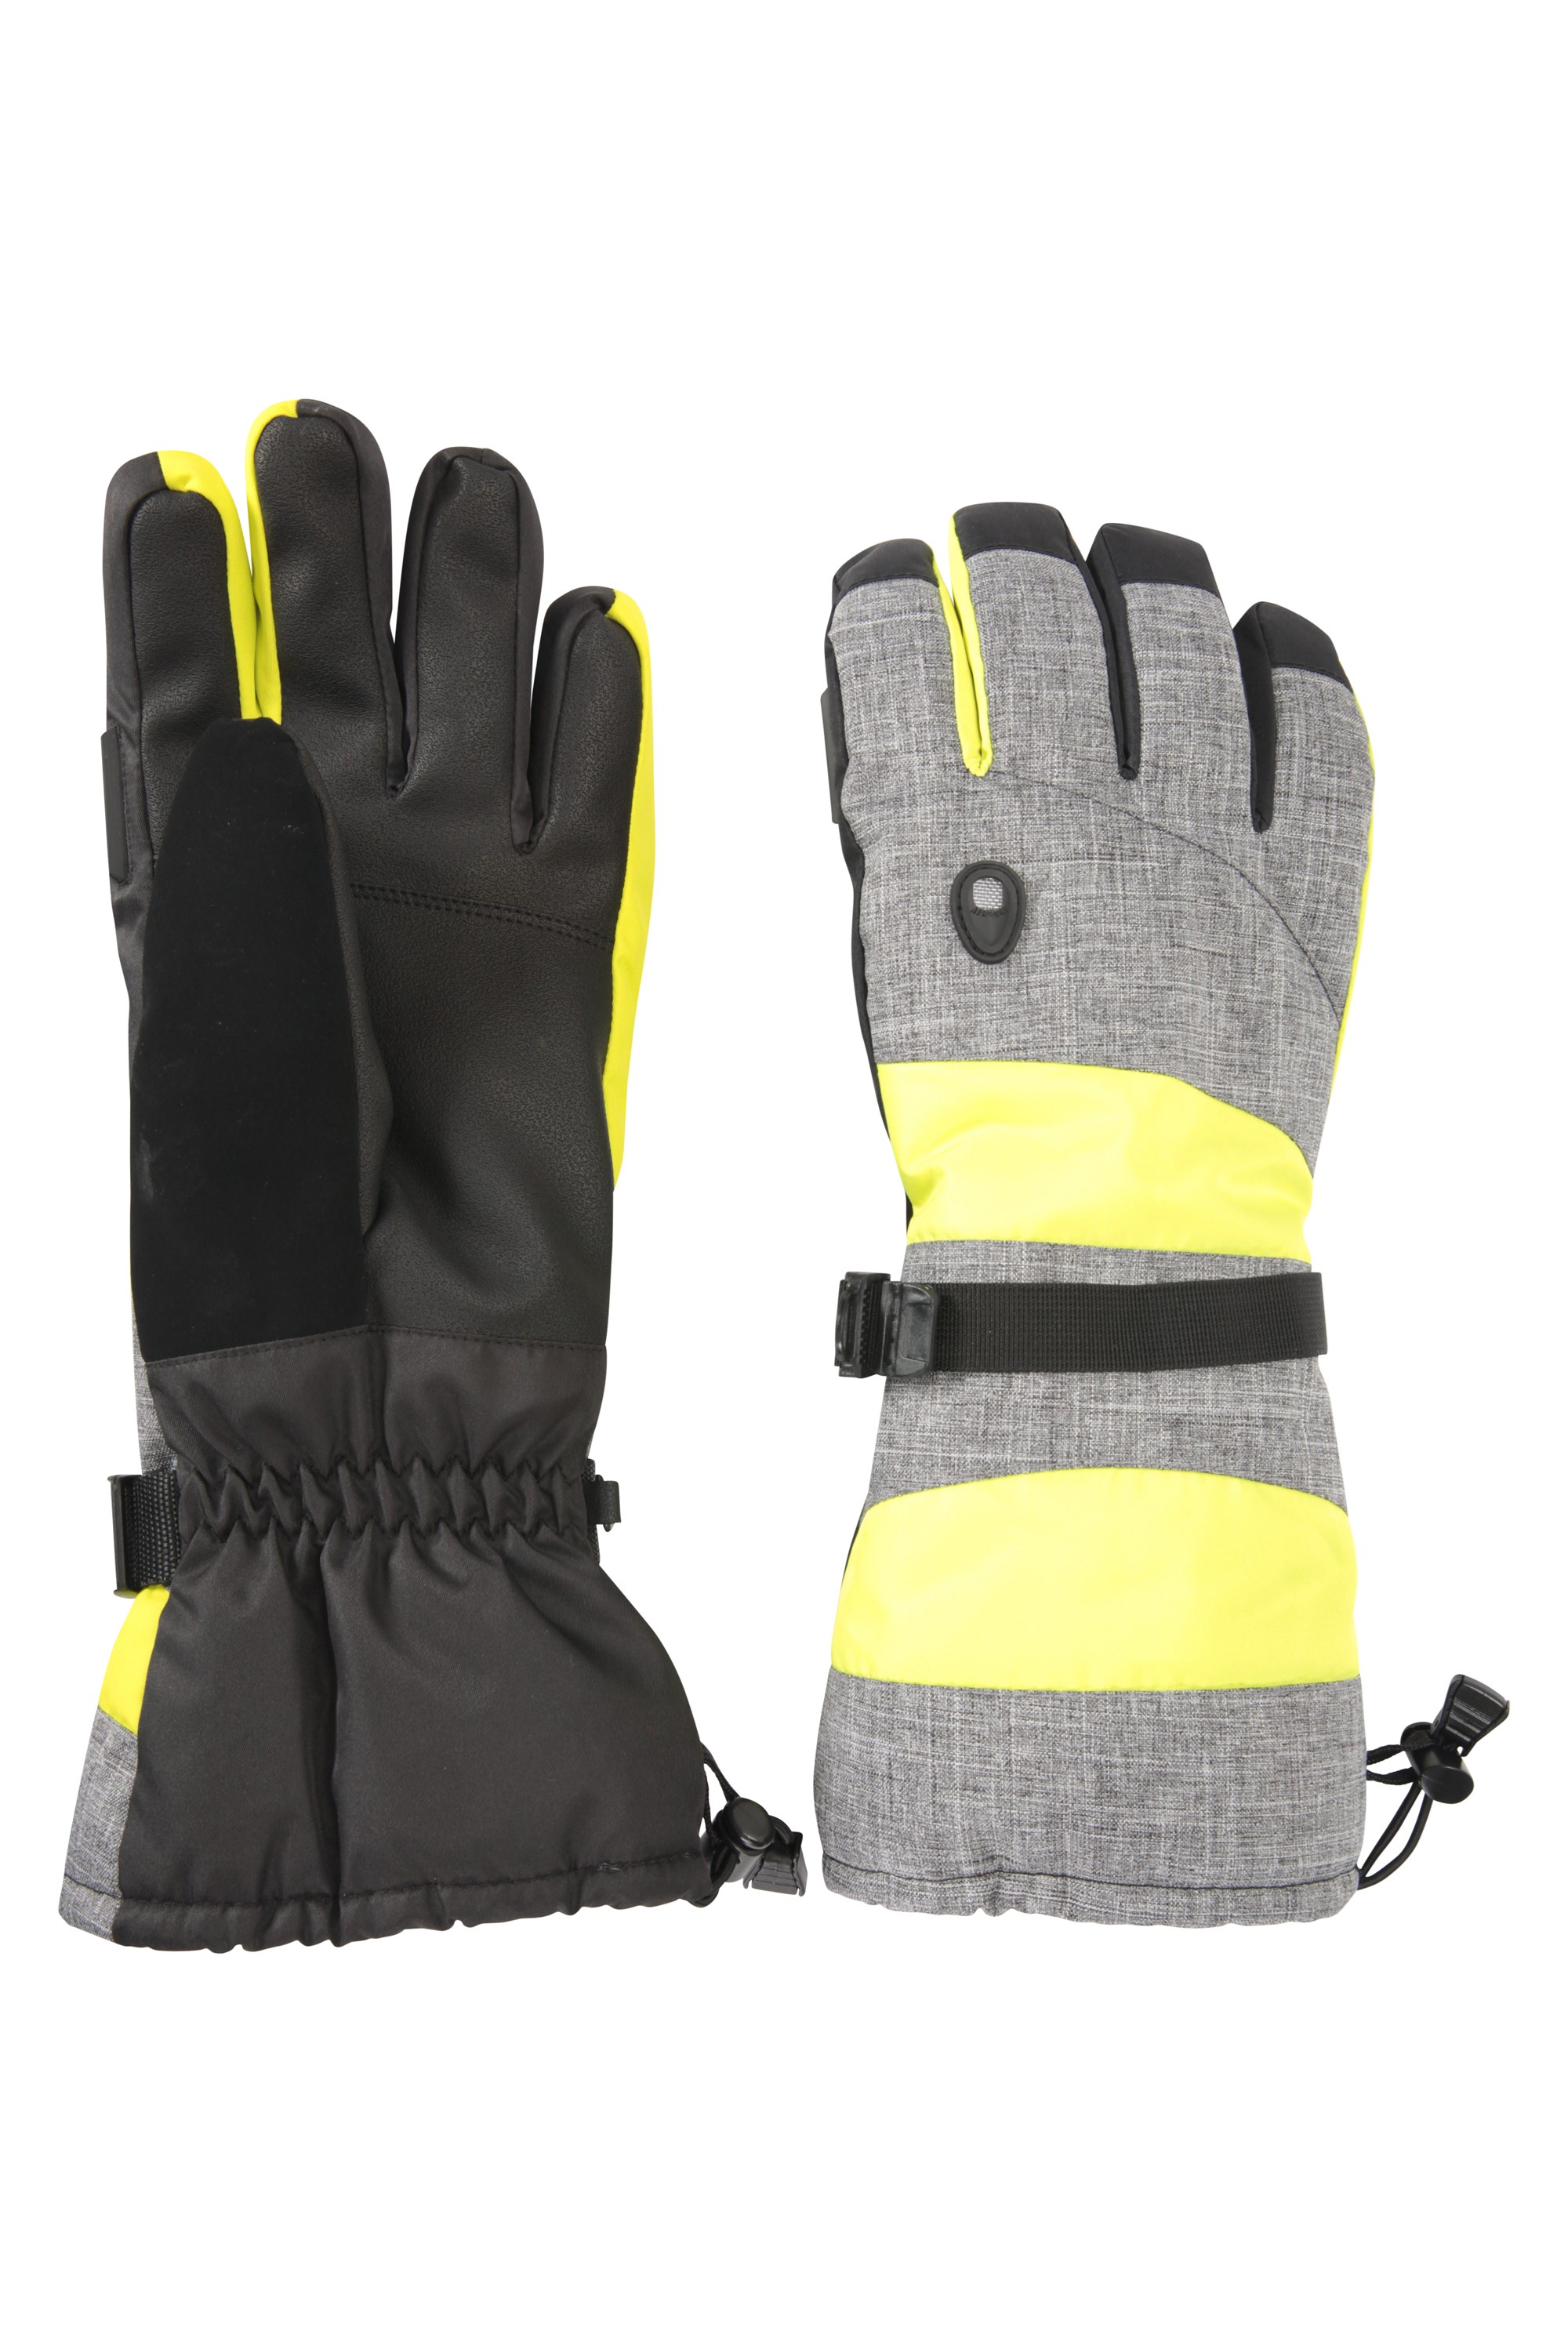 mens yellow ski gloves